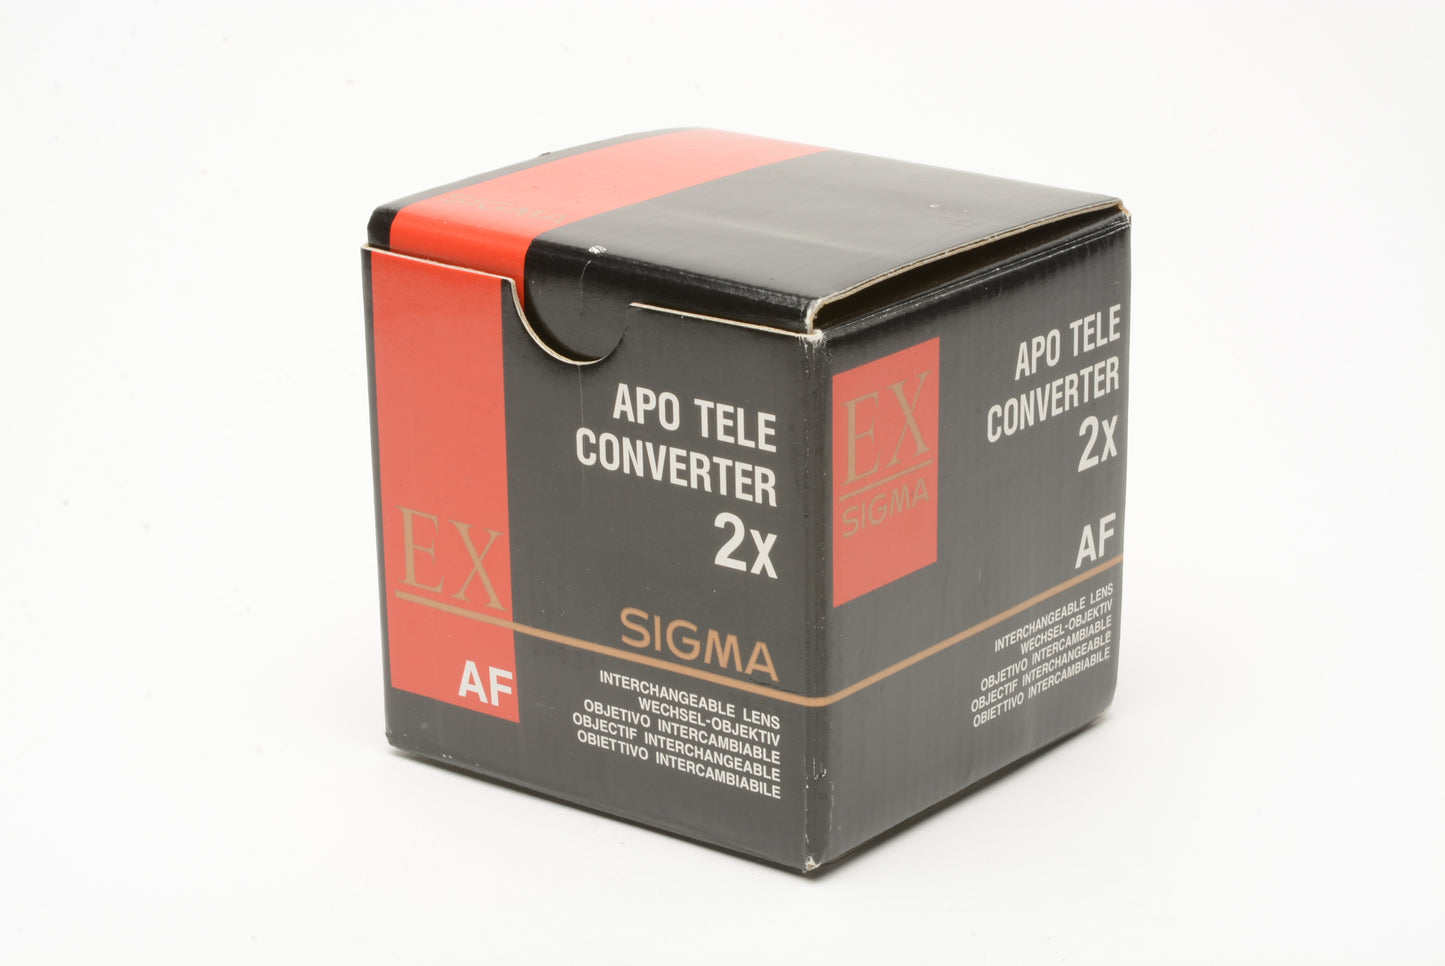 Sigma 2X AF APO Tele Converter EX, caps, case, boxed, barely used - Nikon AF